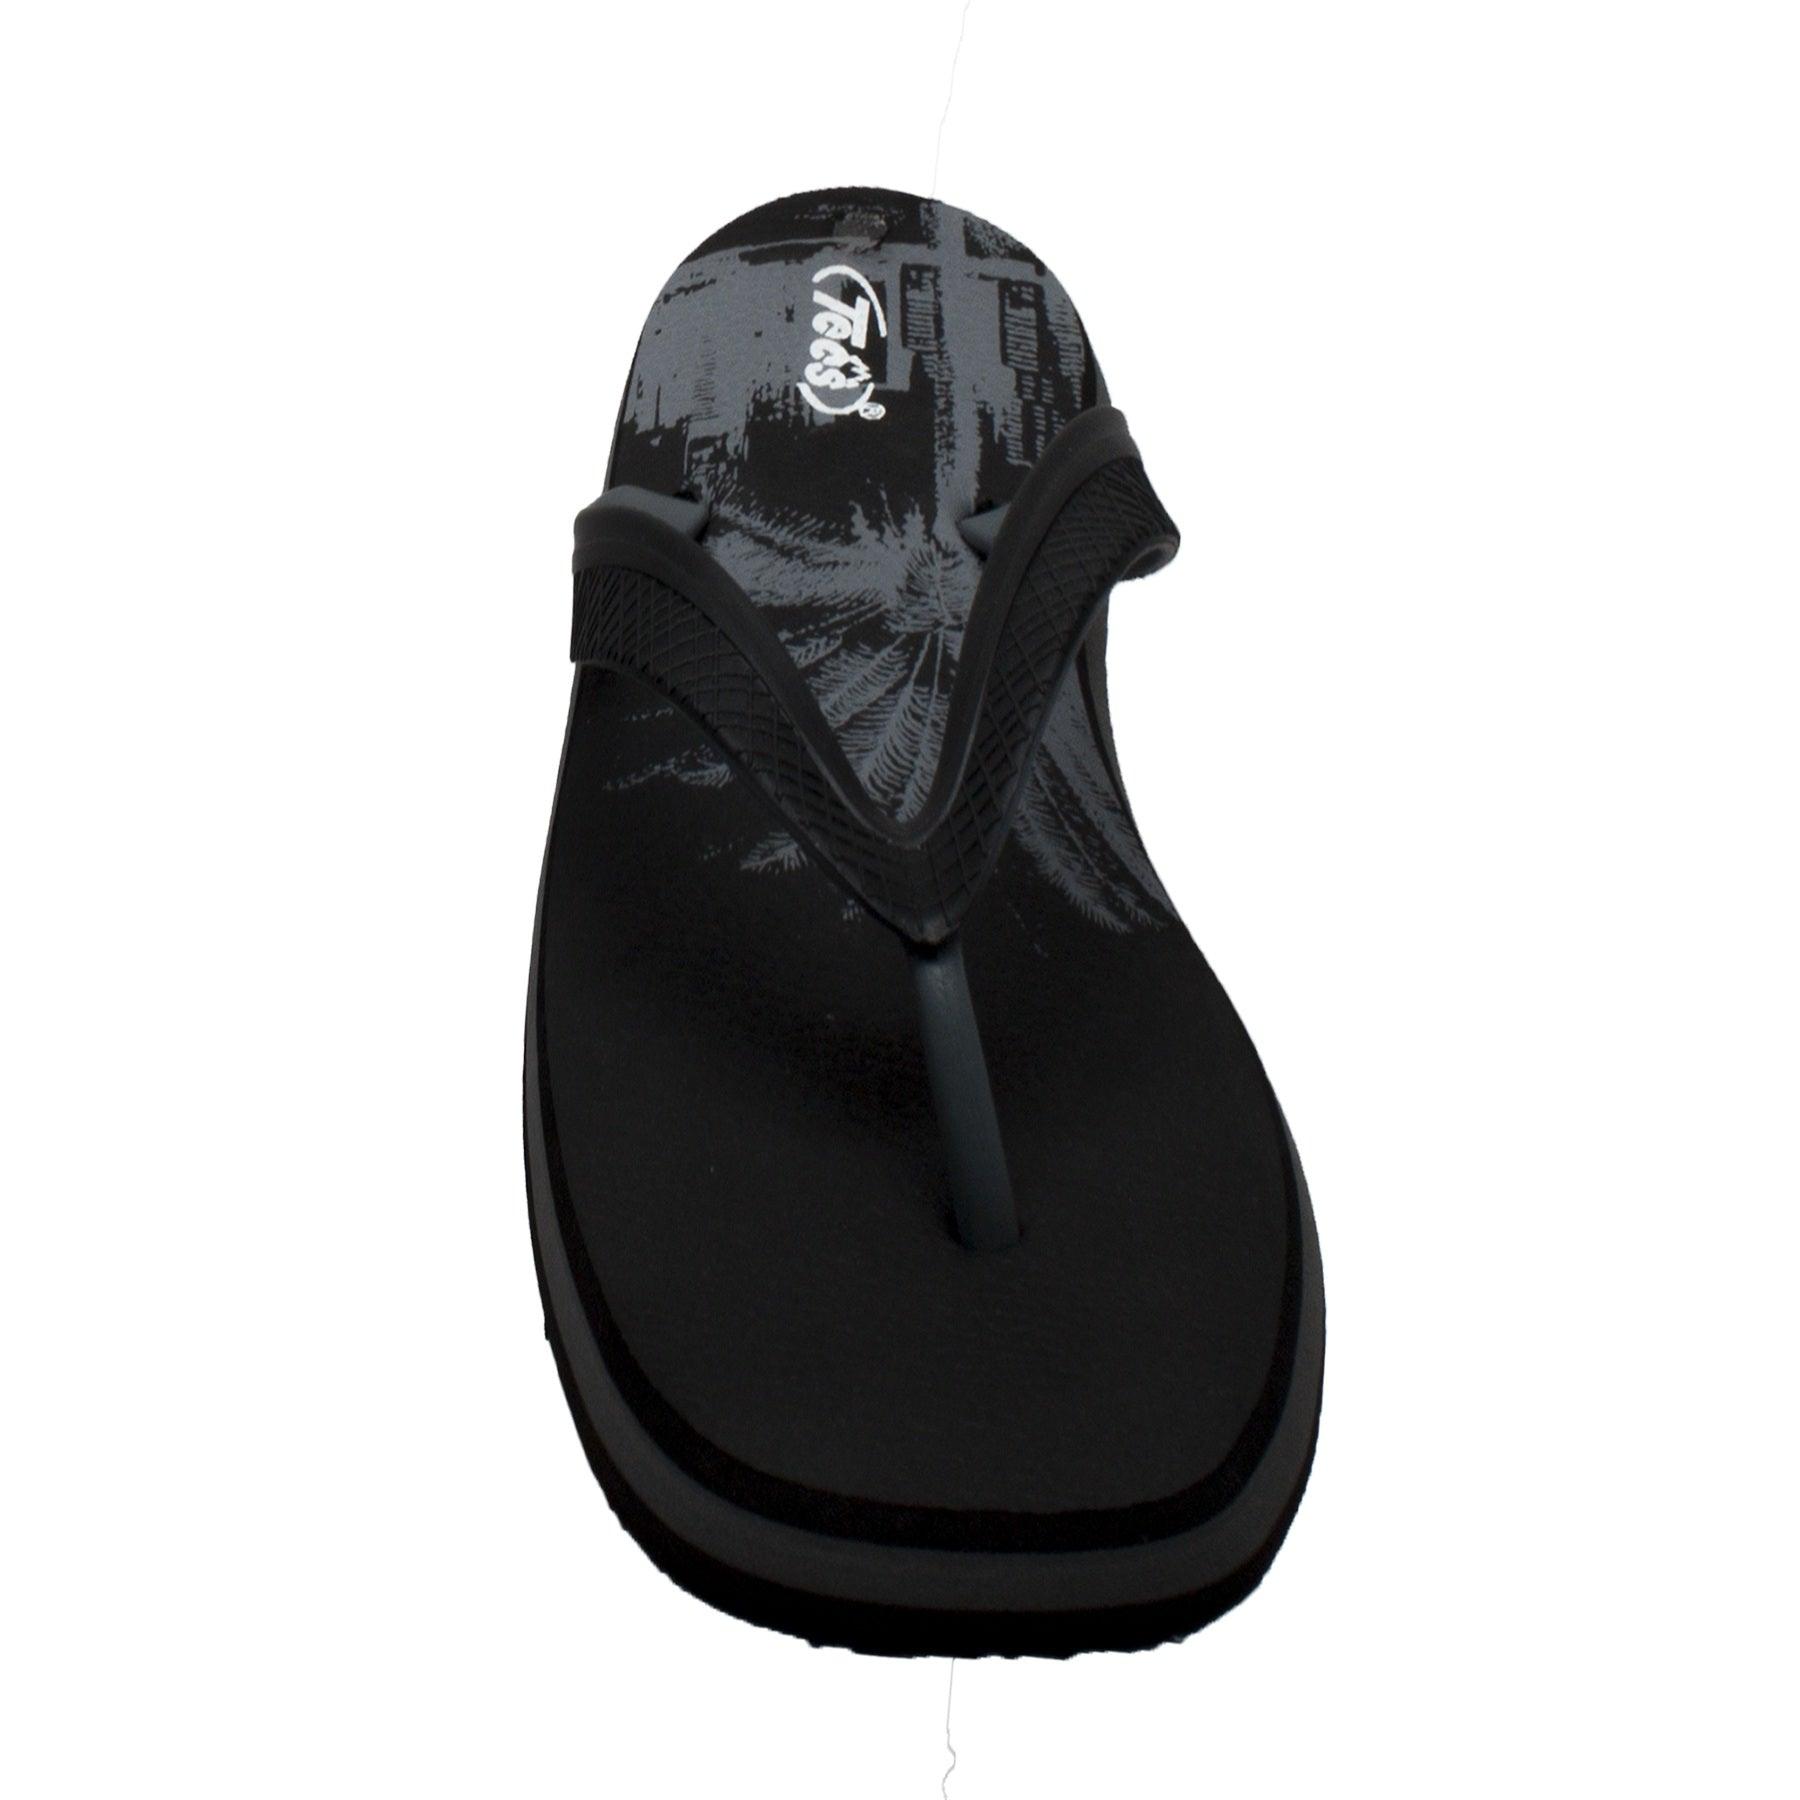 Shaboom Men's Dual Density Comfort Thong Sandal Black - Flyclothing LLC